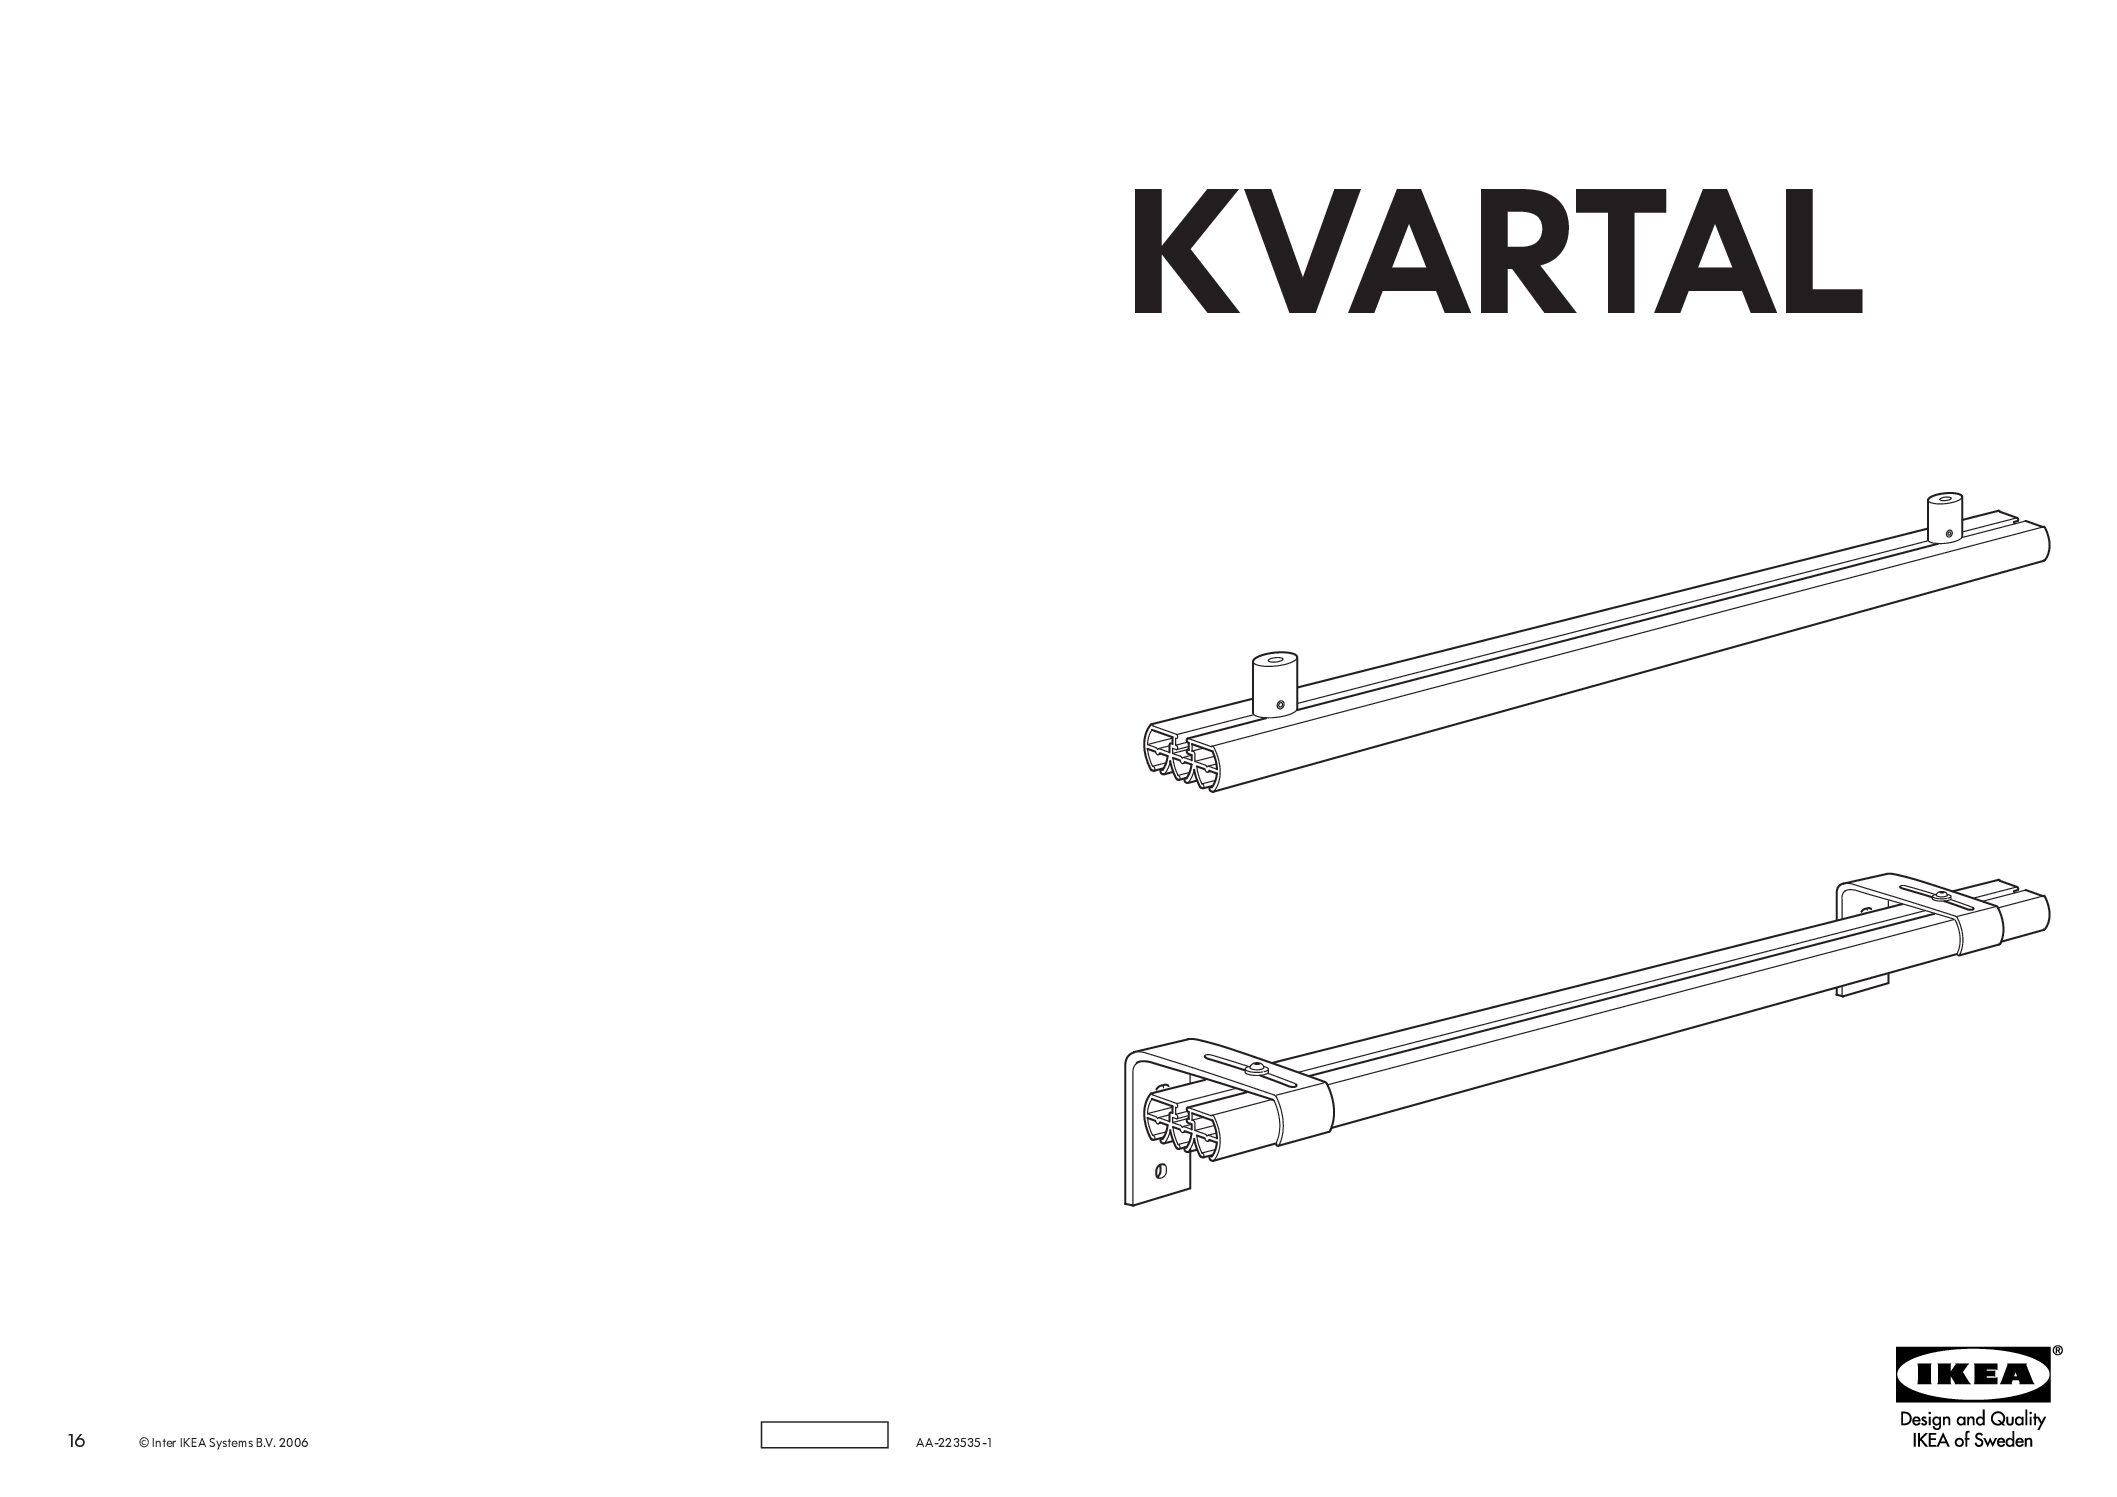 Ikea Kvartal gordijnroede Bedienungsanleitung